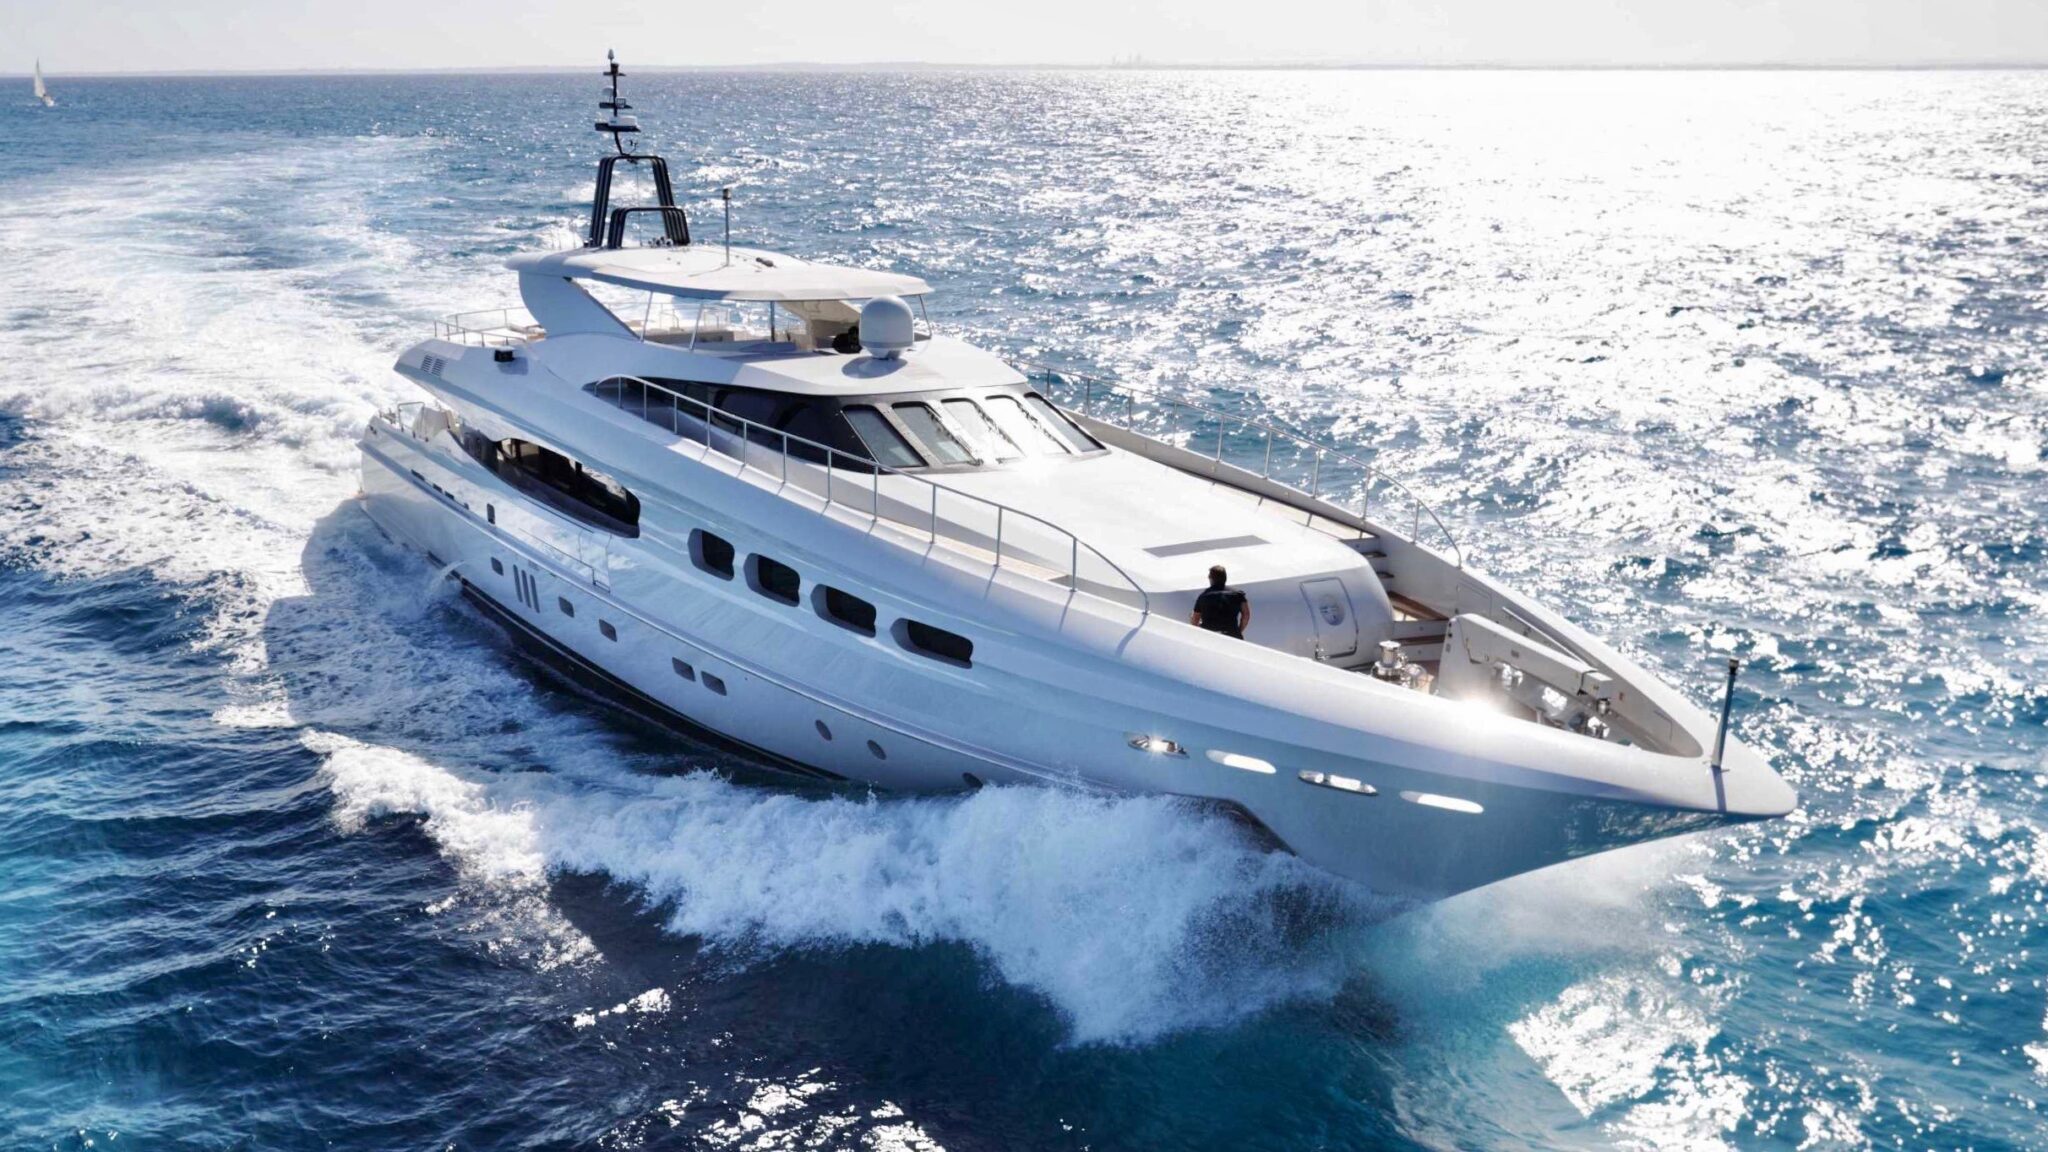 yacht charter market 2022